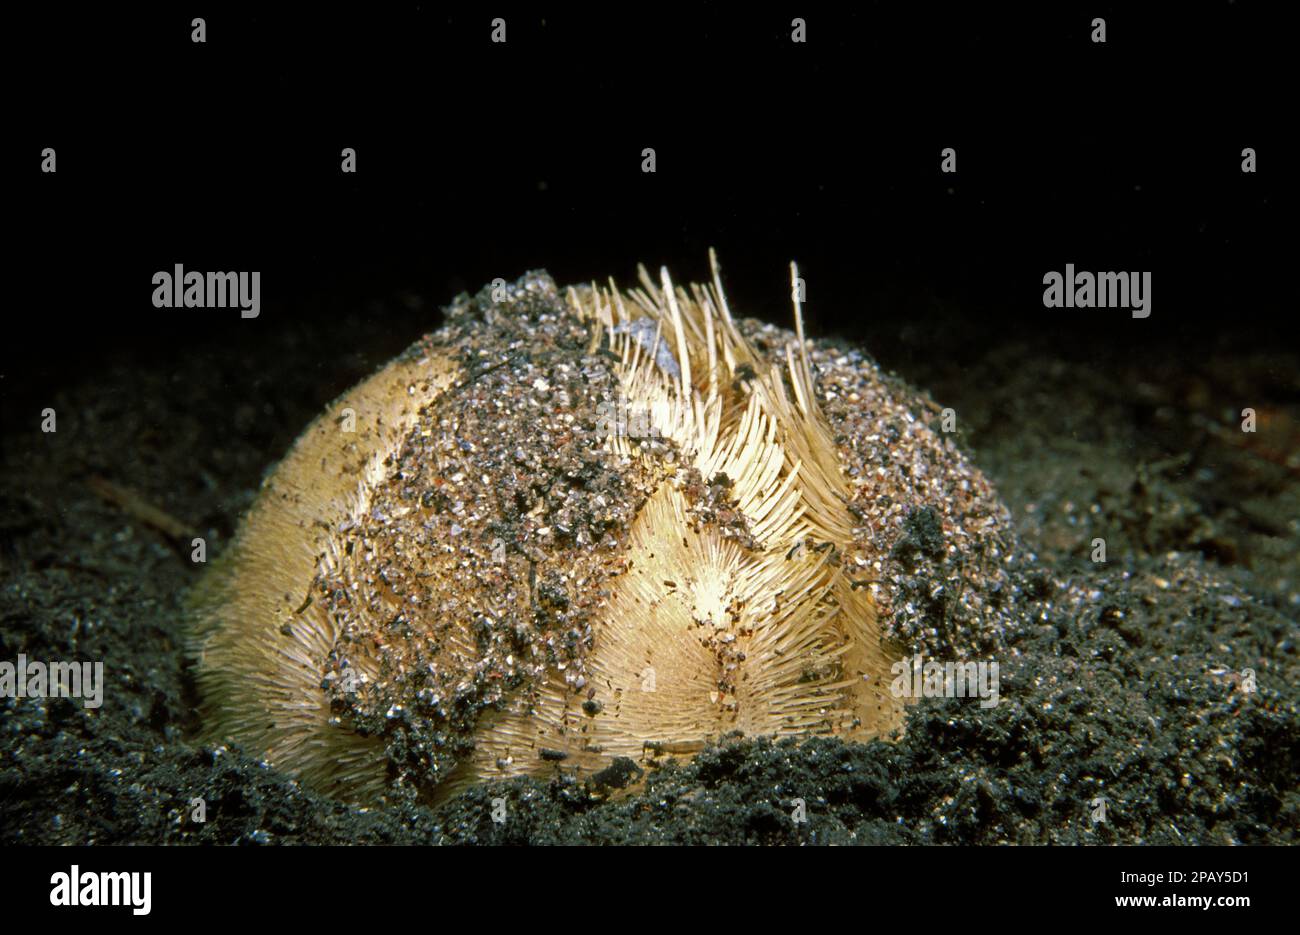 Common heart urchin (Echinocardium cordatum) or sea potato on a sandy seabed, UK. Stock Photo